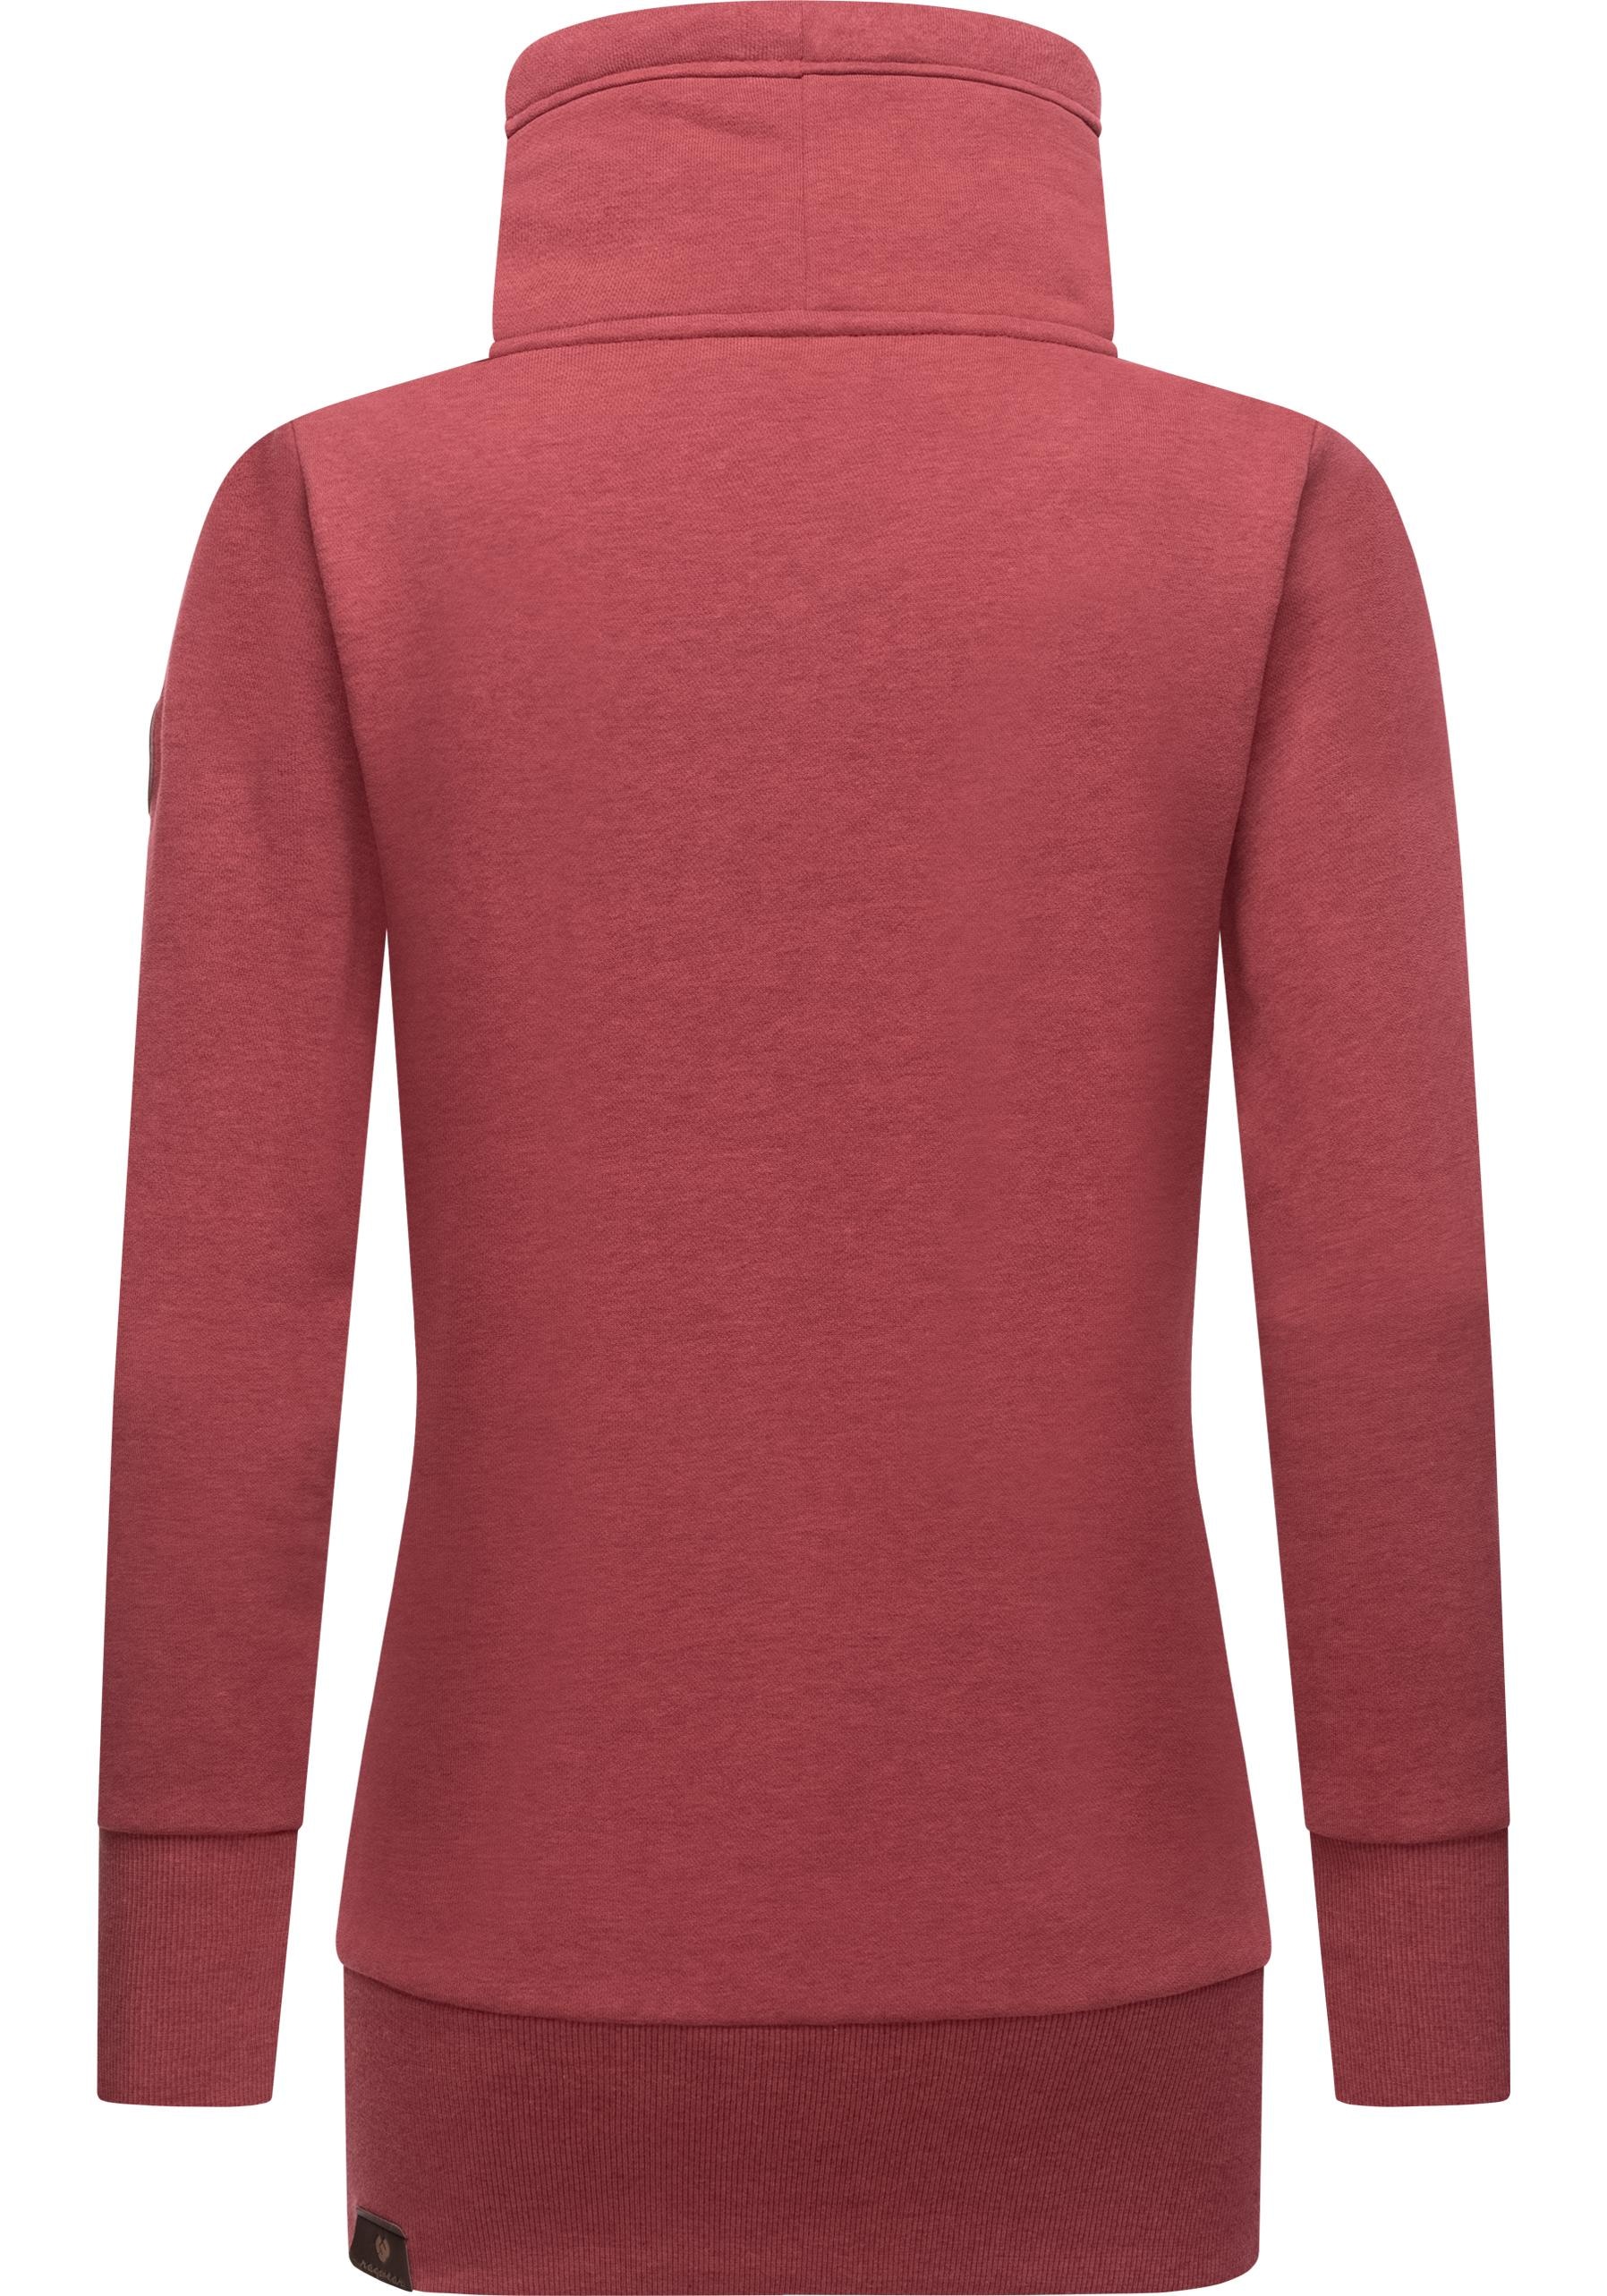 Ragwear Sweatshirt »Neska«, modischer Longsleeve Pullover mit hohem Kragen